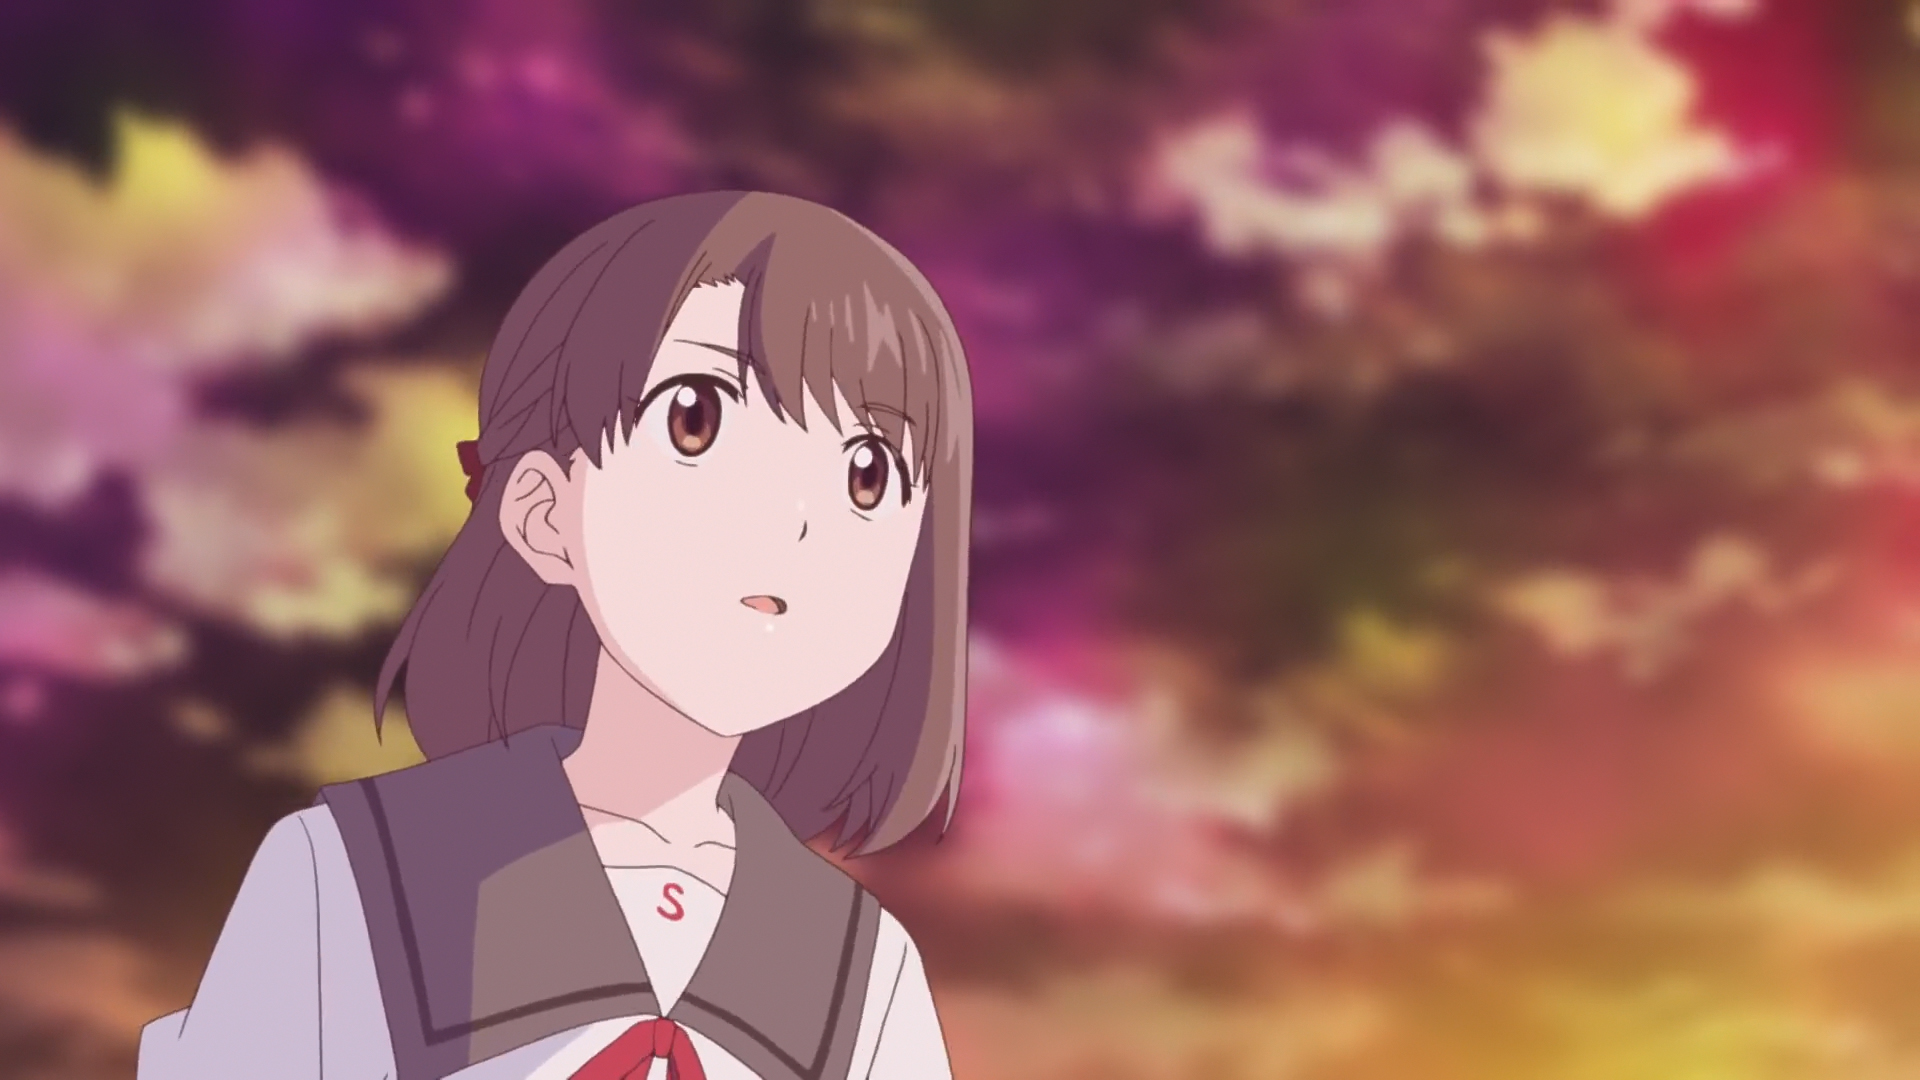 Anime Trending - Kimi wa Kanata - New Preview! The